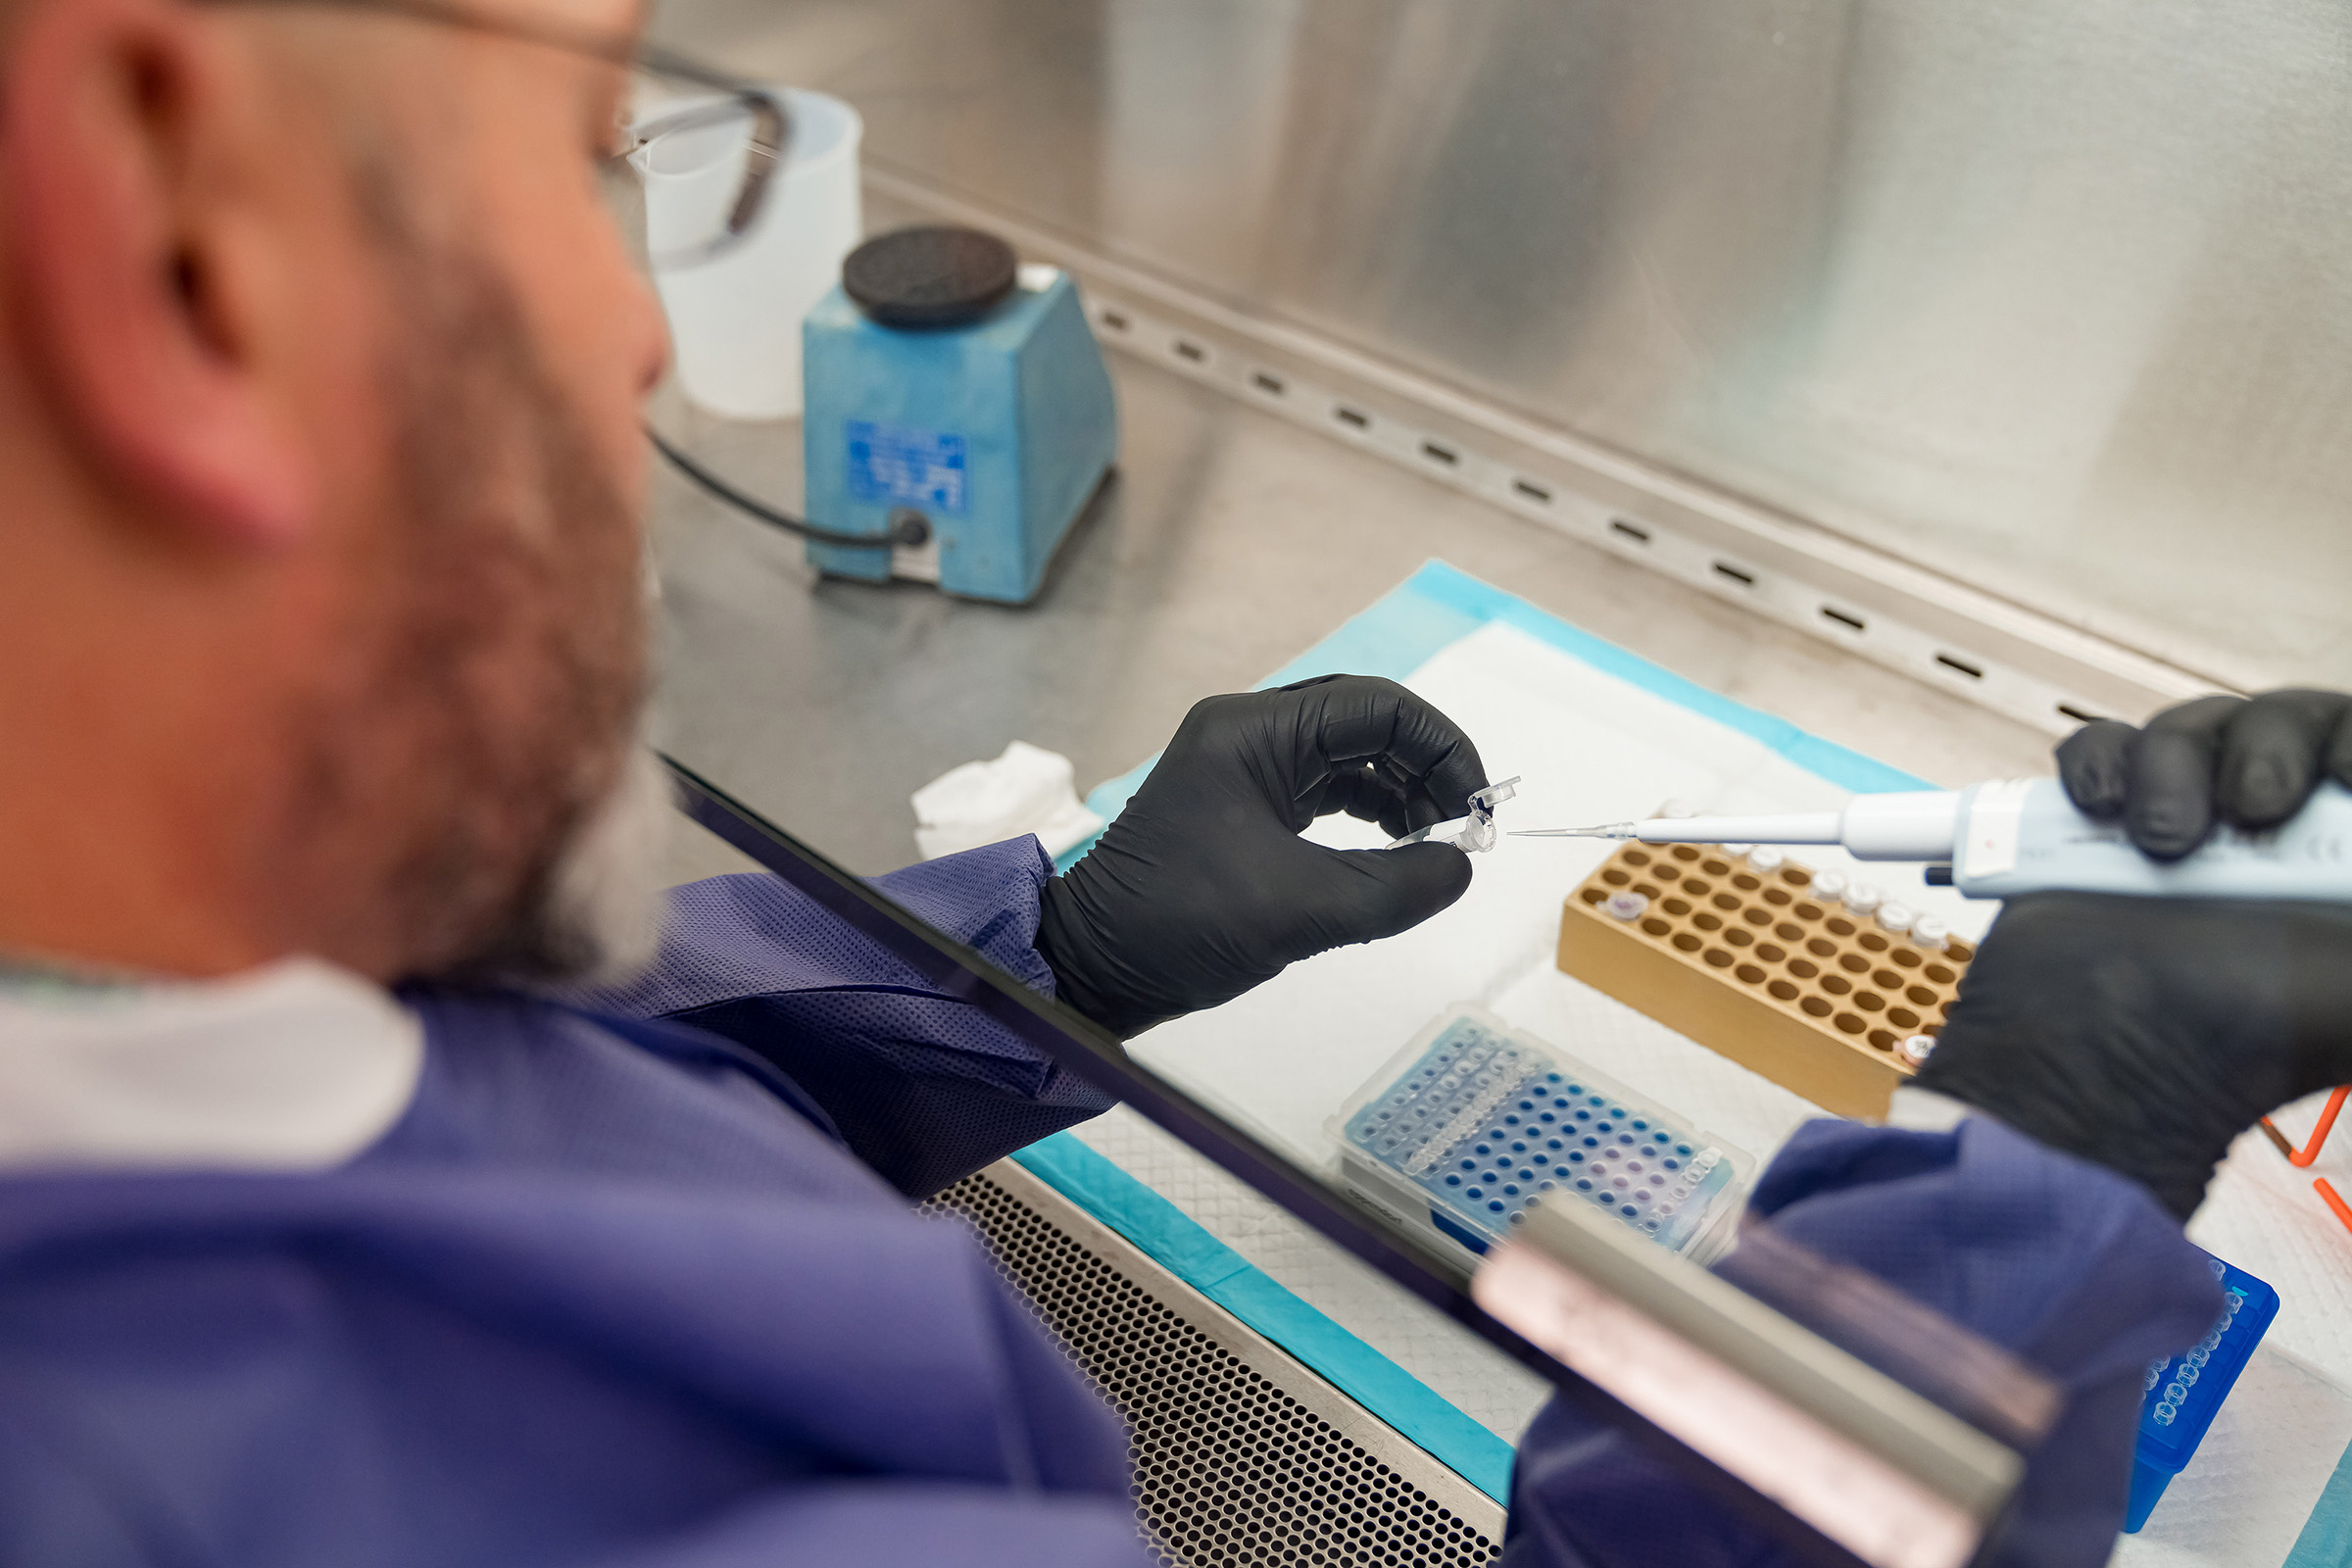 Samples of coronavirus being prepared for testing in the New York health department's virology lab. (New York State Department of Health via The New York Times)